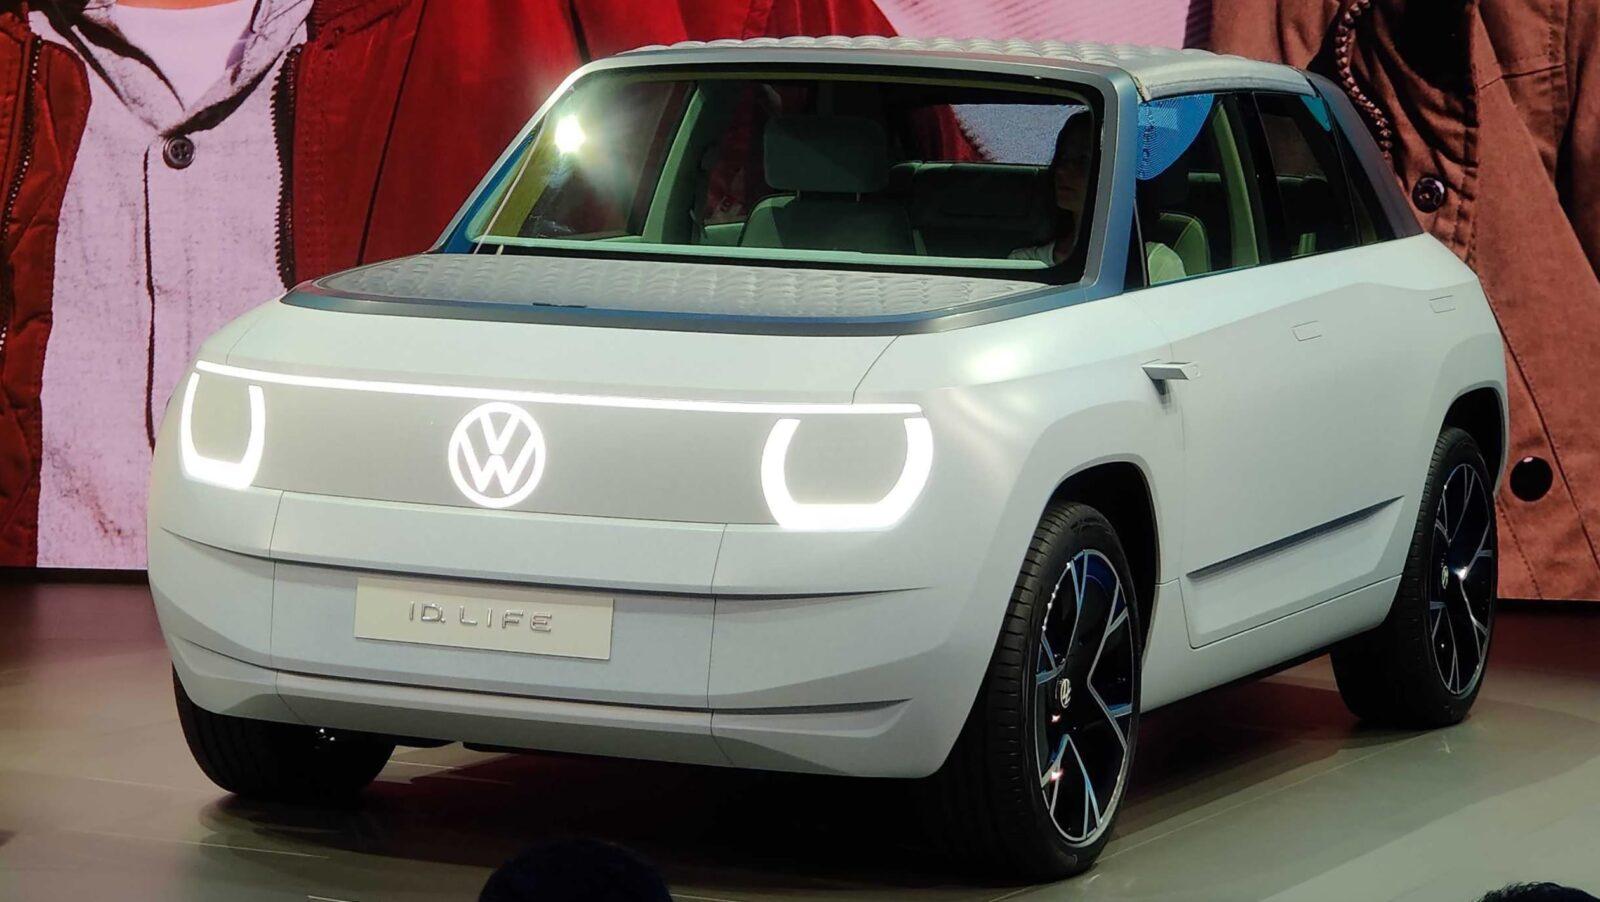 Volkswagen представил новый концепт-кар ID.Life на IAA MOBILITY 2021 в Мюнхене (volkswagen id life munich)